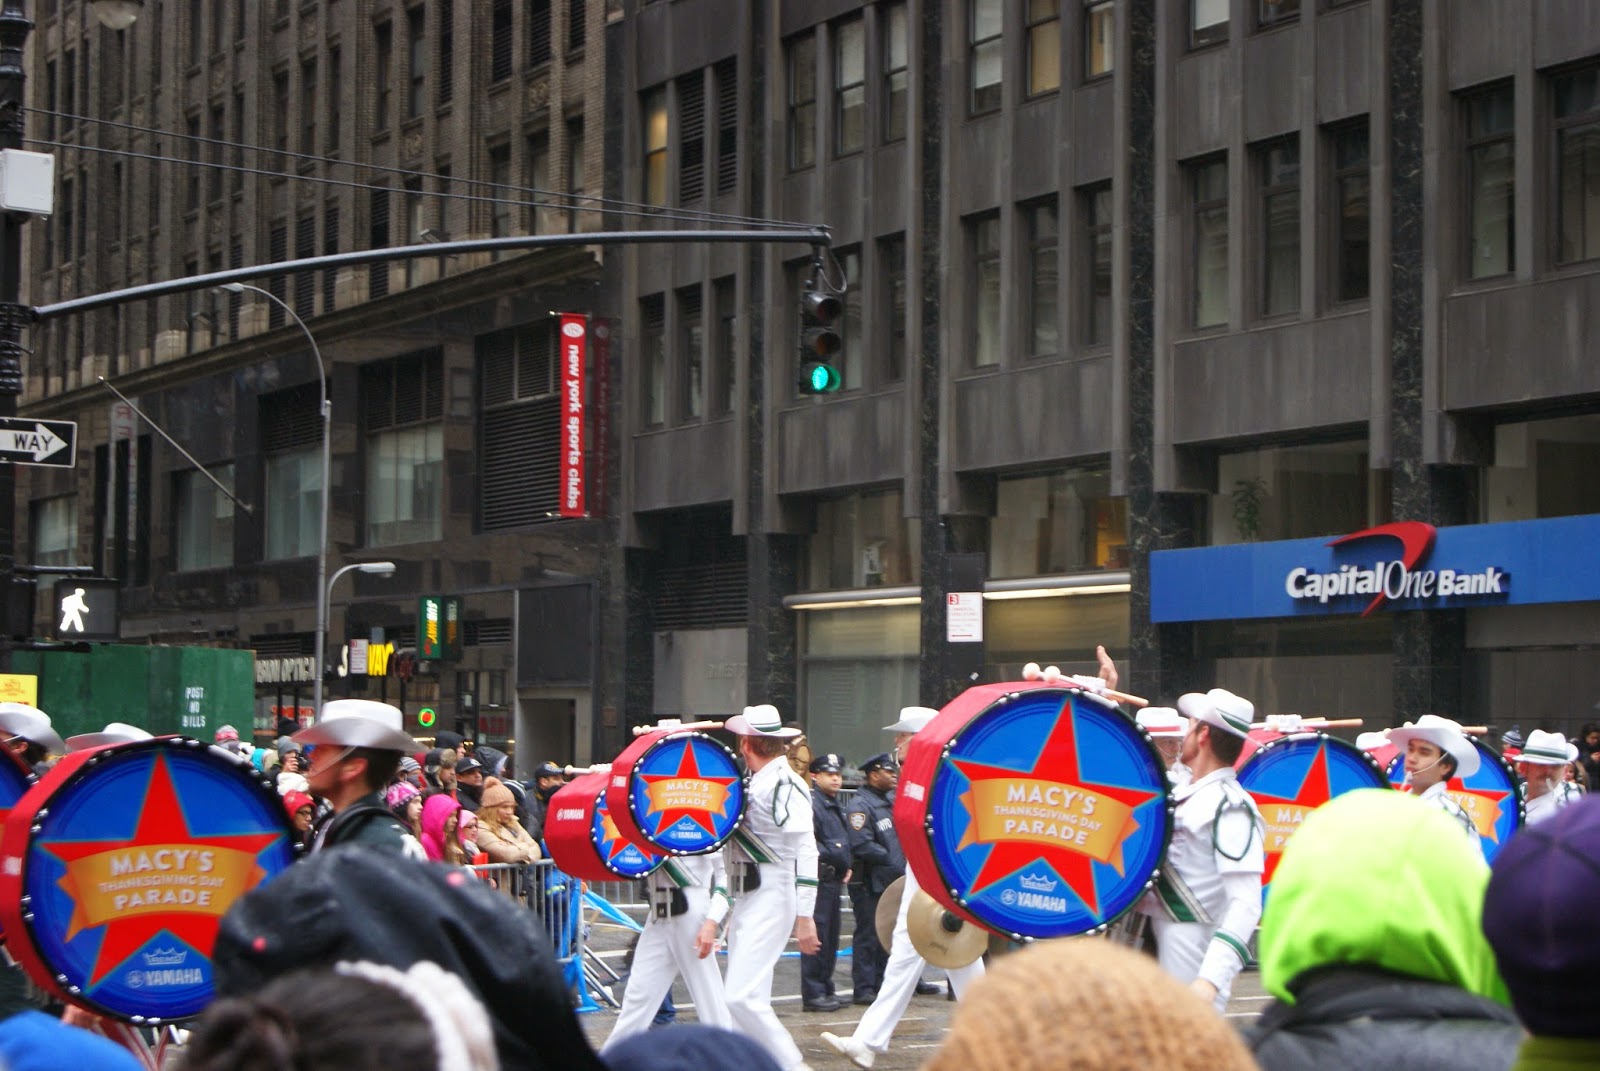 Macys Thanksgiving parade marching band